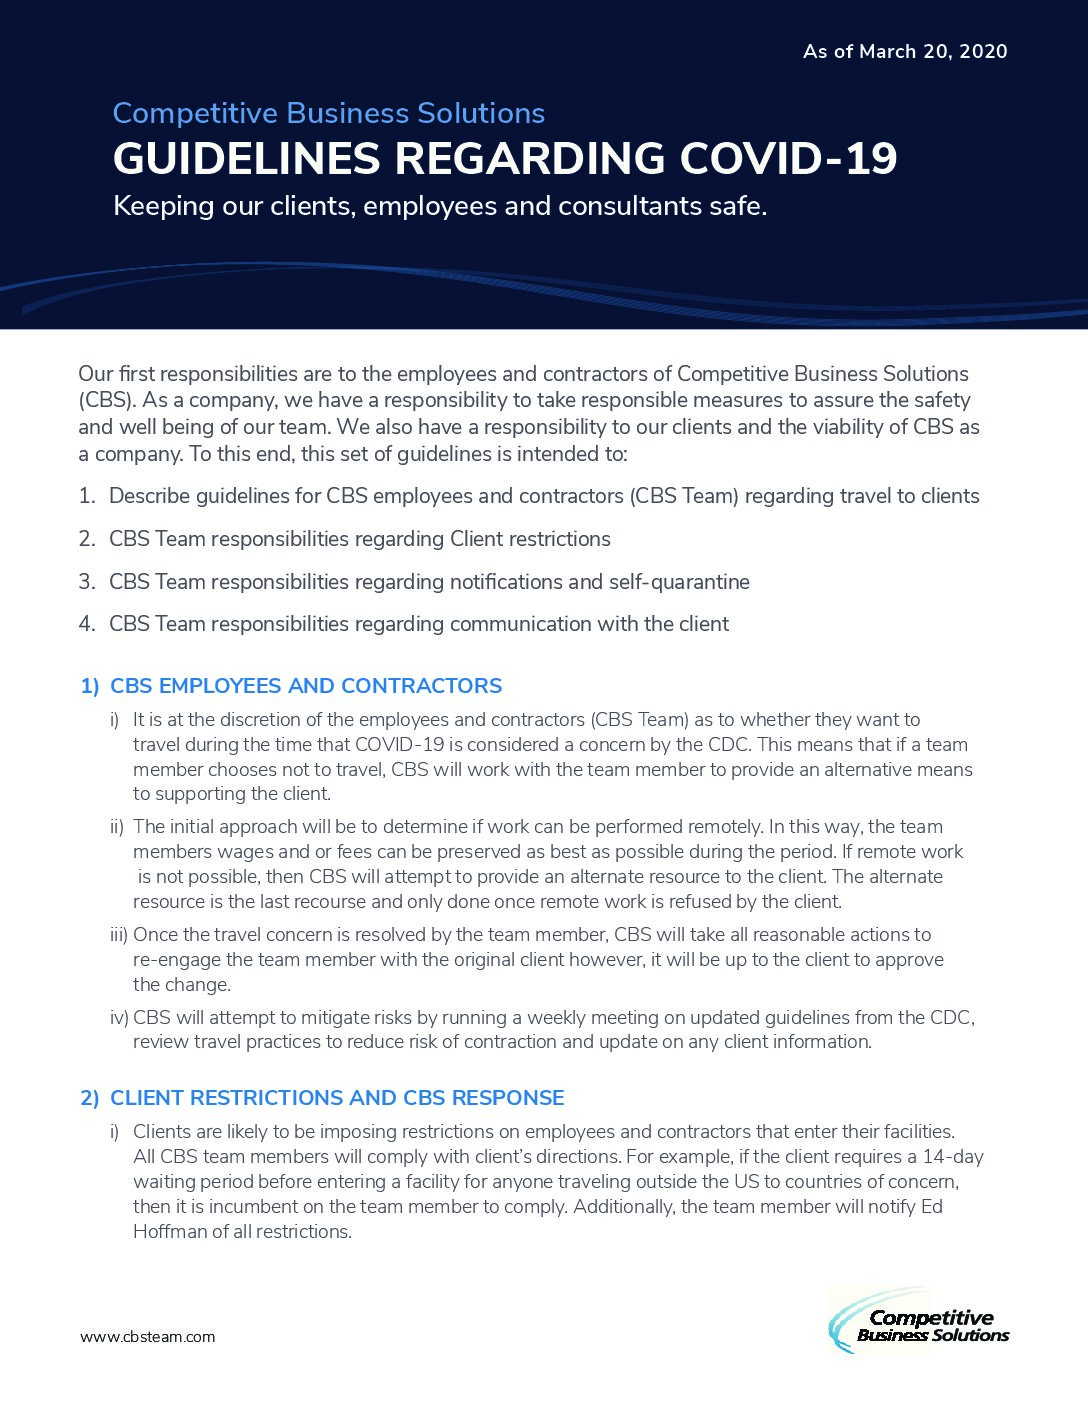 CBS-039_COVID19_Guidelines-pdf.jpg